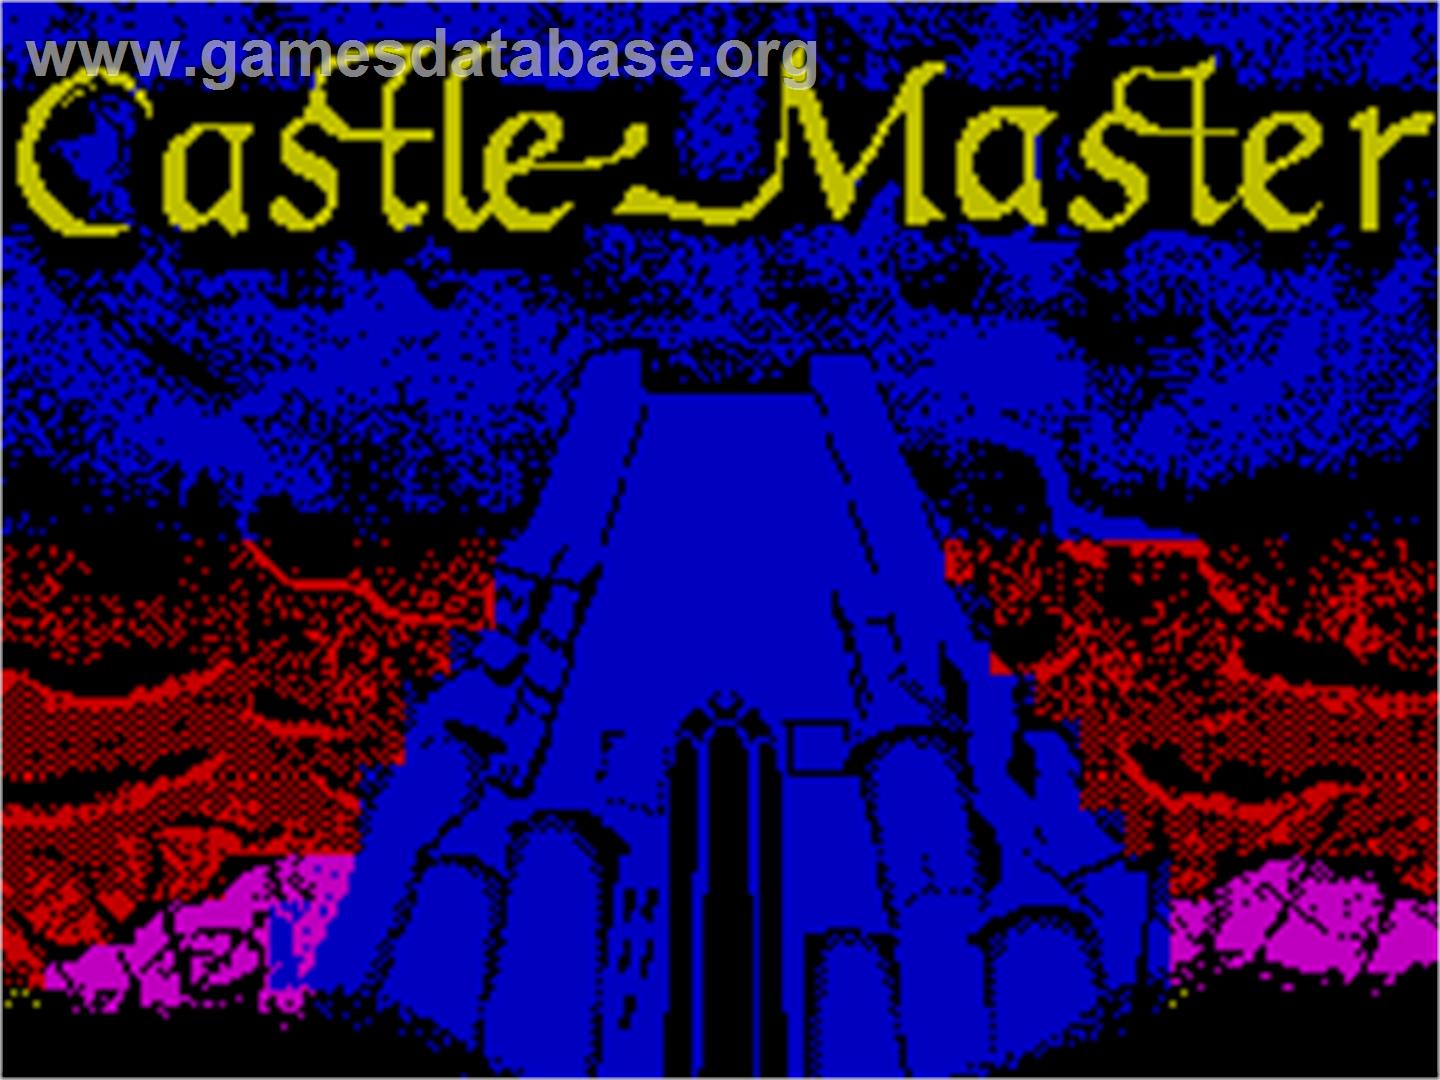 Castle Master - Sinclair ZX Spectrum - Artwork - Title Screen